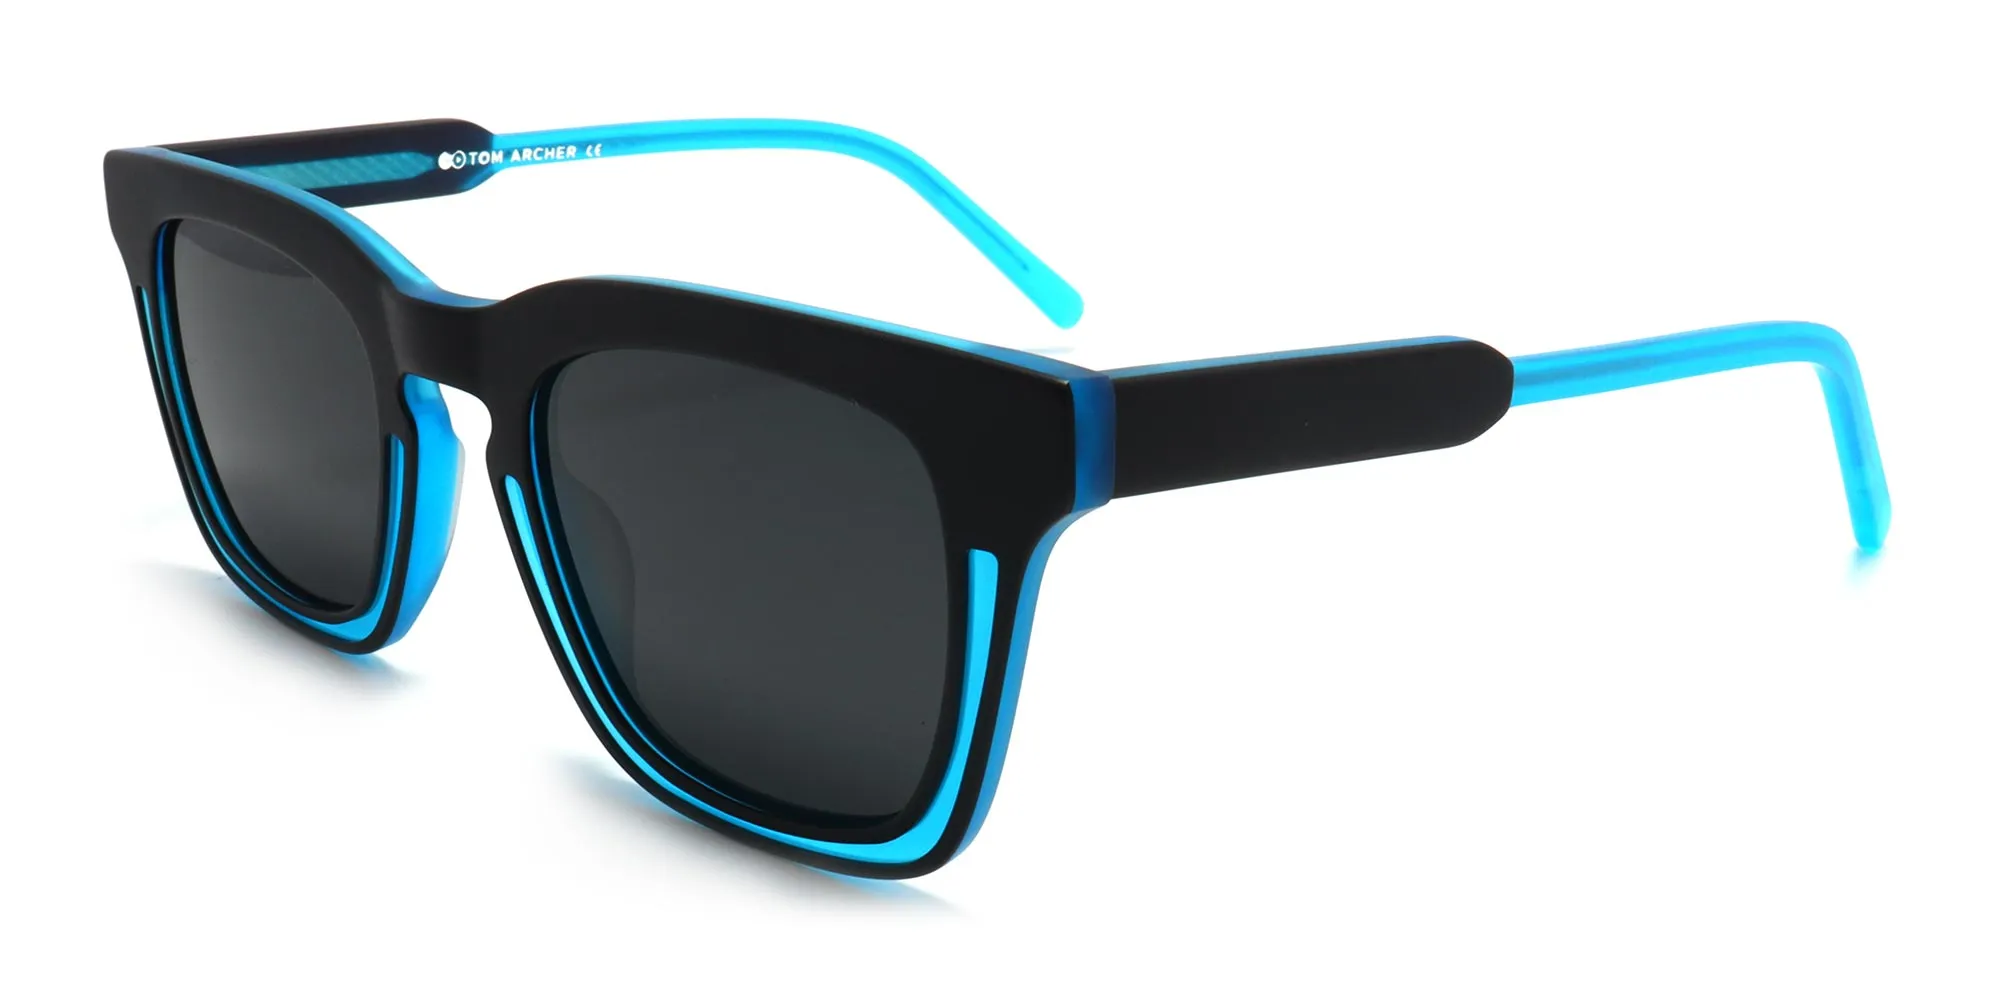 black and blue sunglasses